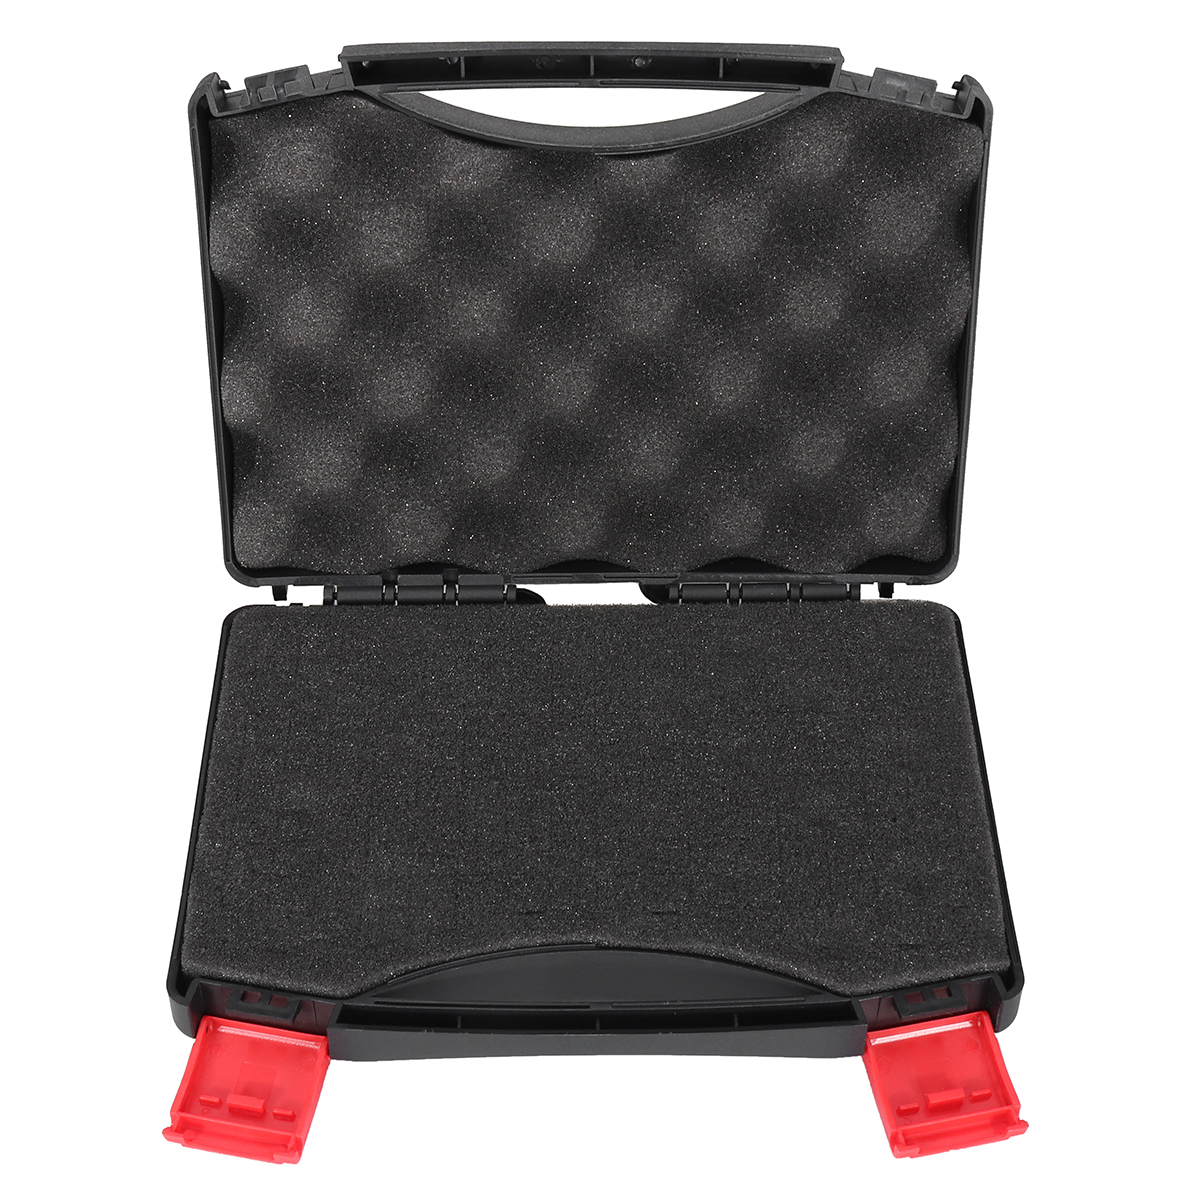 Black-Hard-PP-Carry-Case-Bag-Tool-Holder-Storage-Box-Portable-Organizer-1683613-6